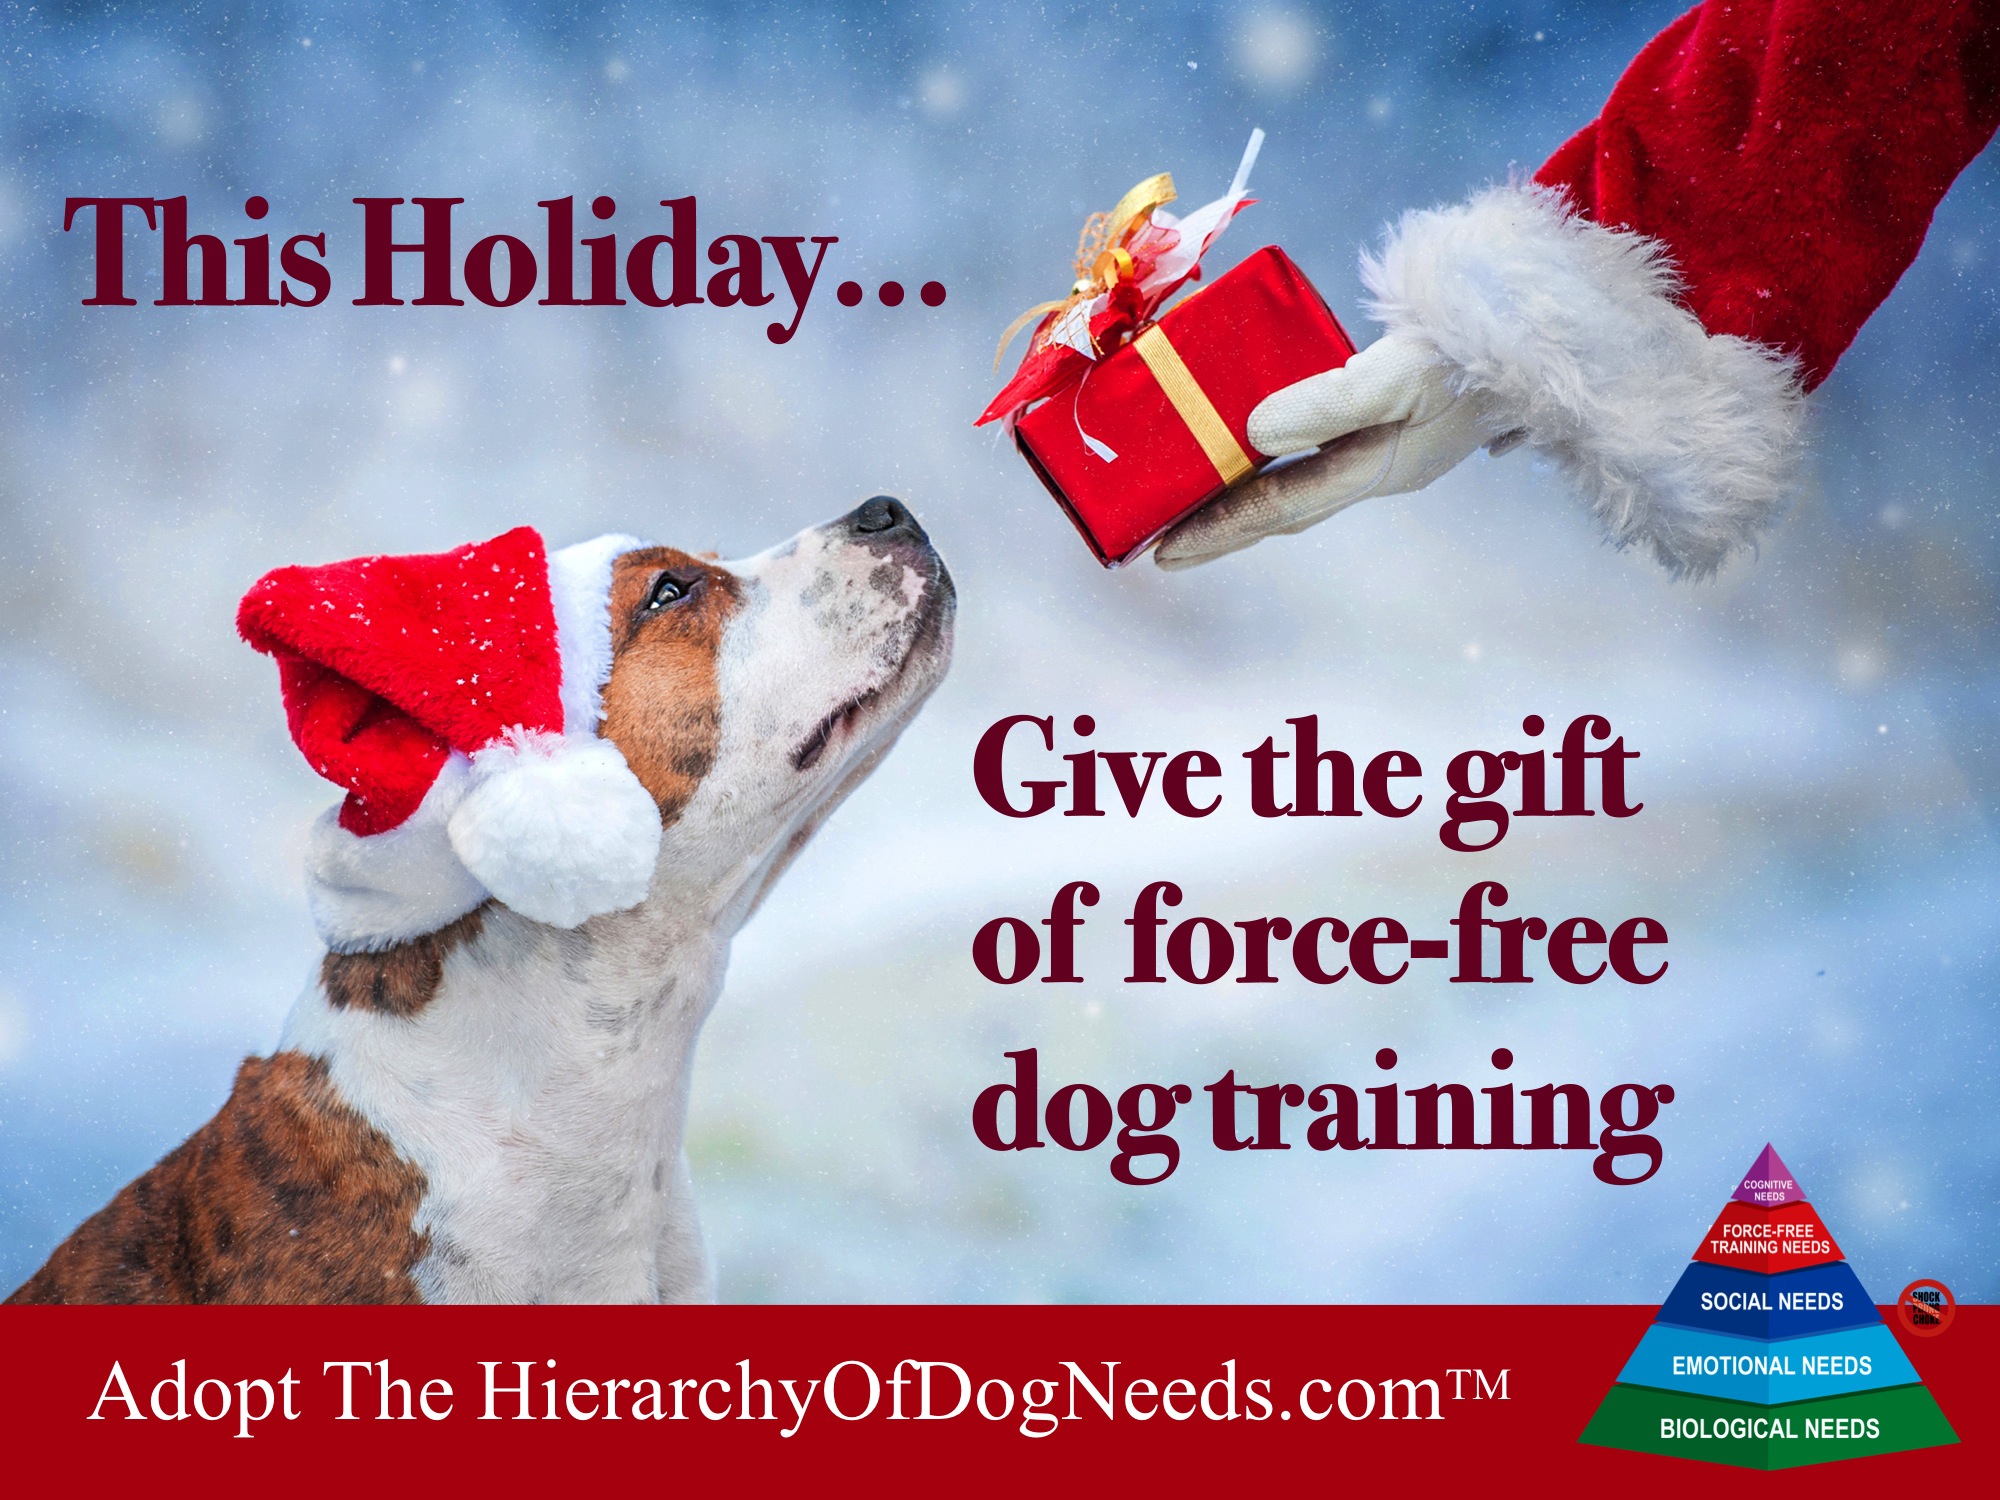 Linda Michaels Del Mar Dog Training Hierarchy of Dog Needs